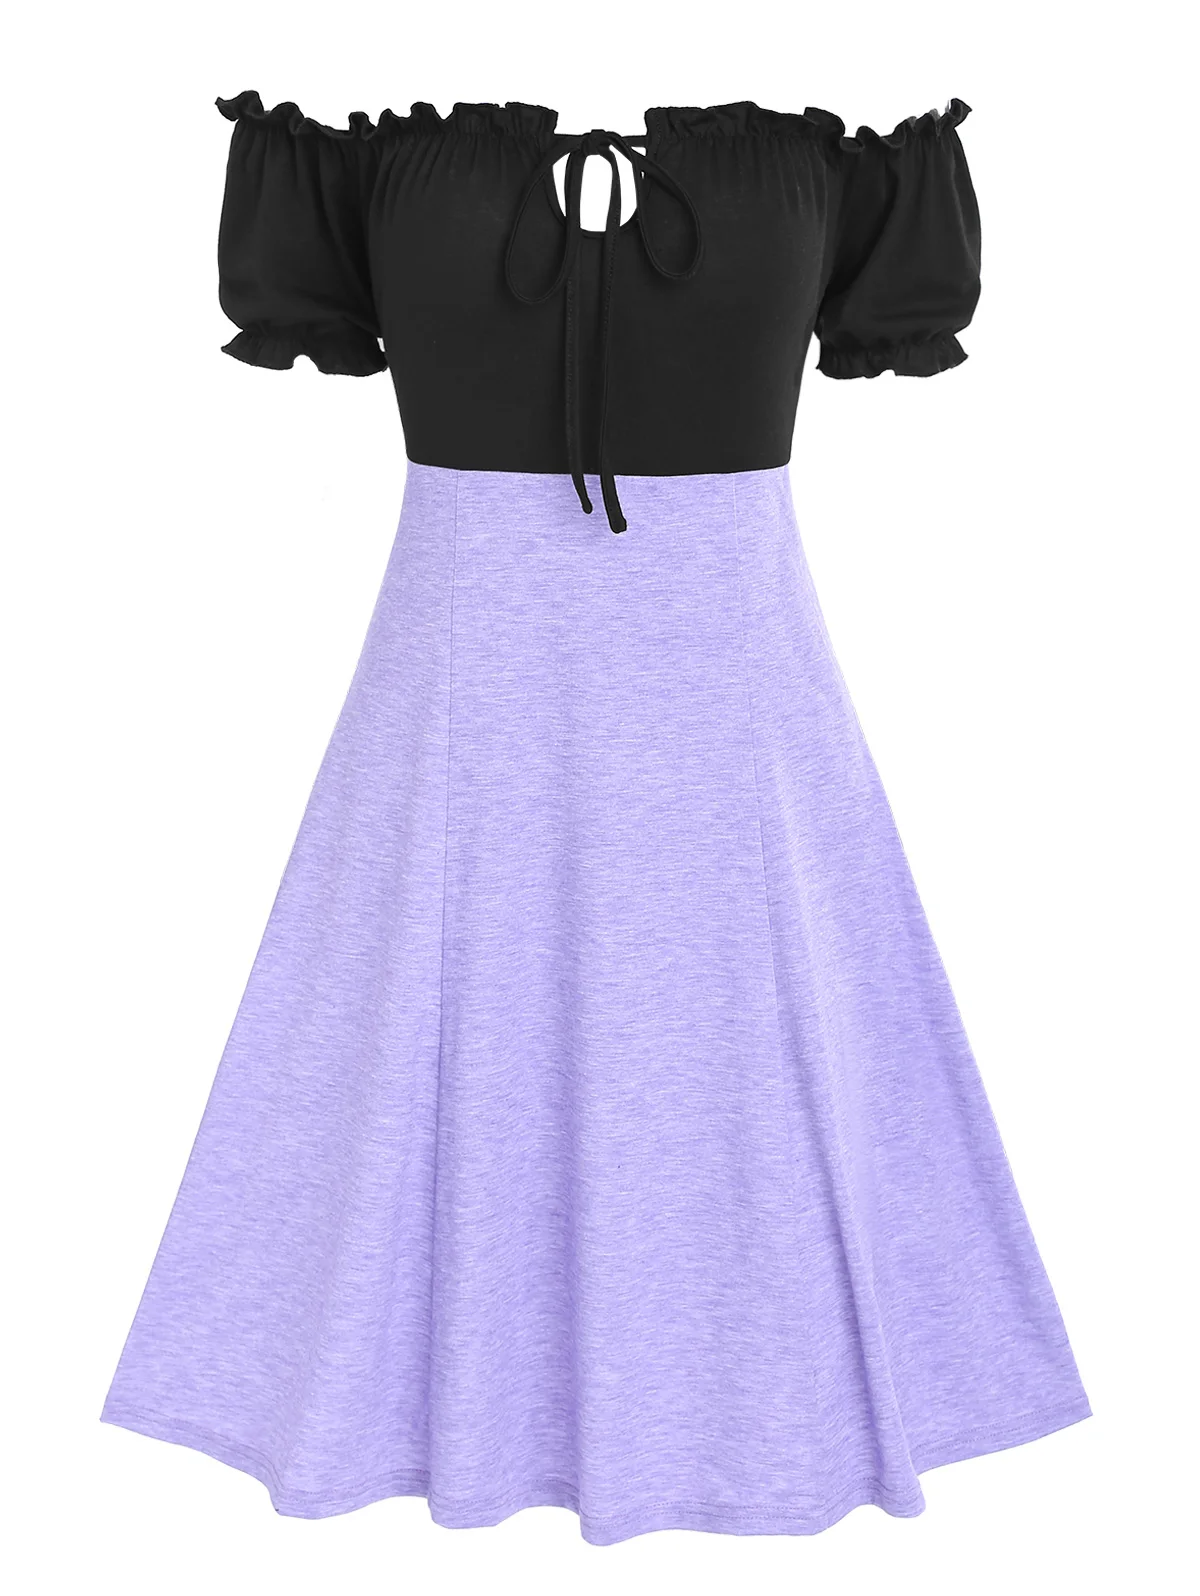 

Dressfo Dress Contrast Bicolor Colorblock Off Shoulder Puff Sleeve Frilled A Line Flare Keyhole Bardot Dress 2023